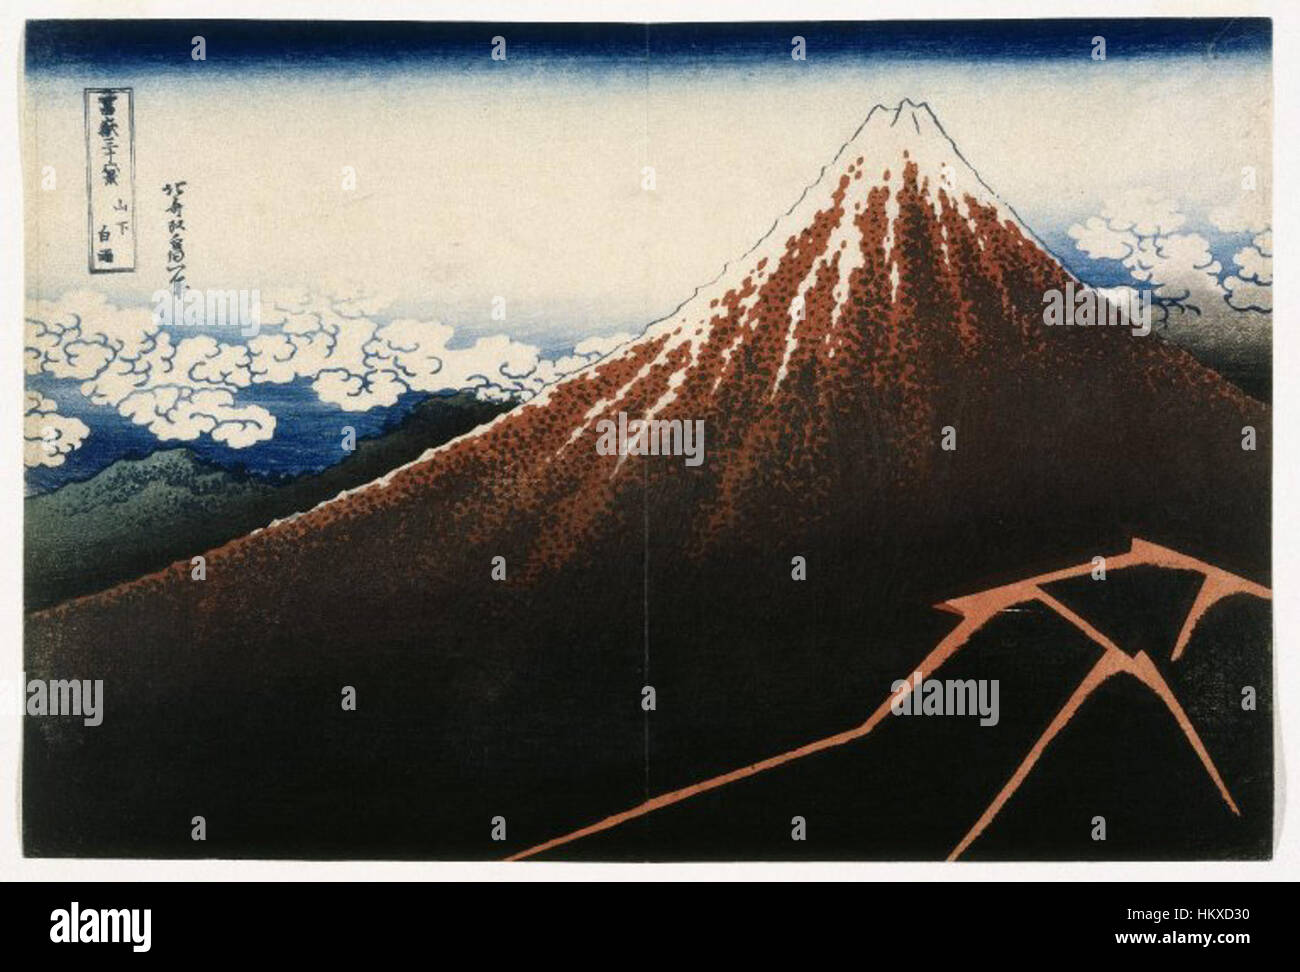 Brooklyn Museum - A Shower Below the Summit from the series Thirty -six Views of Mount Fuji (Fugaku sanjurokkei) - Katsushika Hokusai Stock Photo